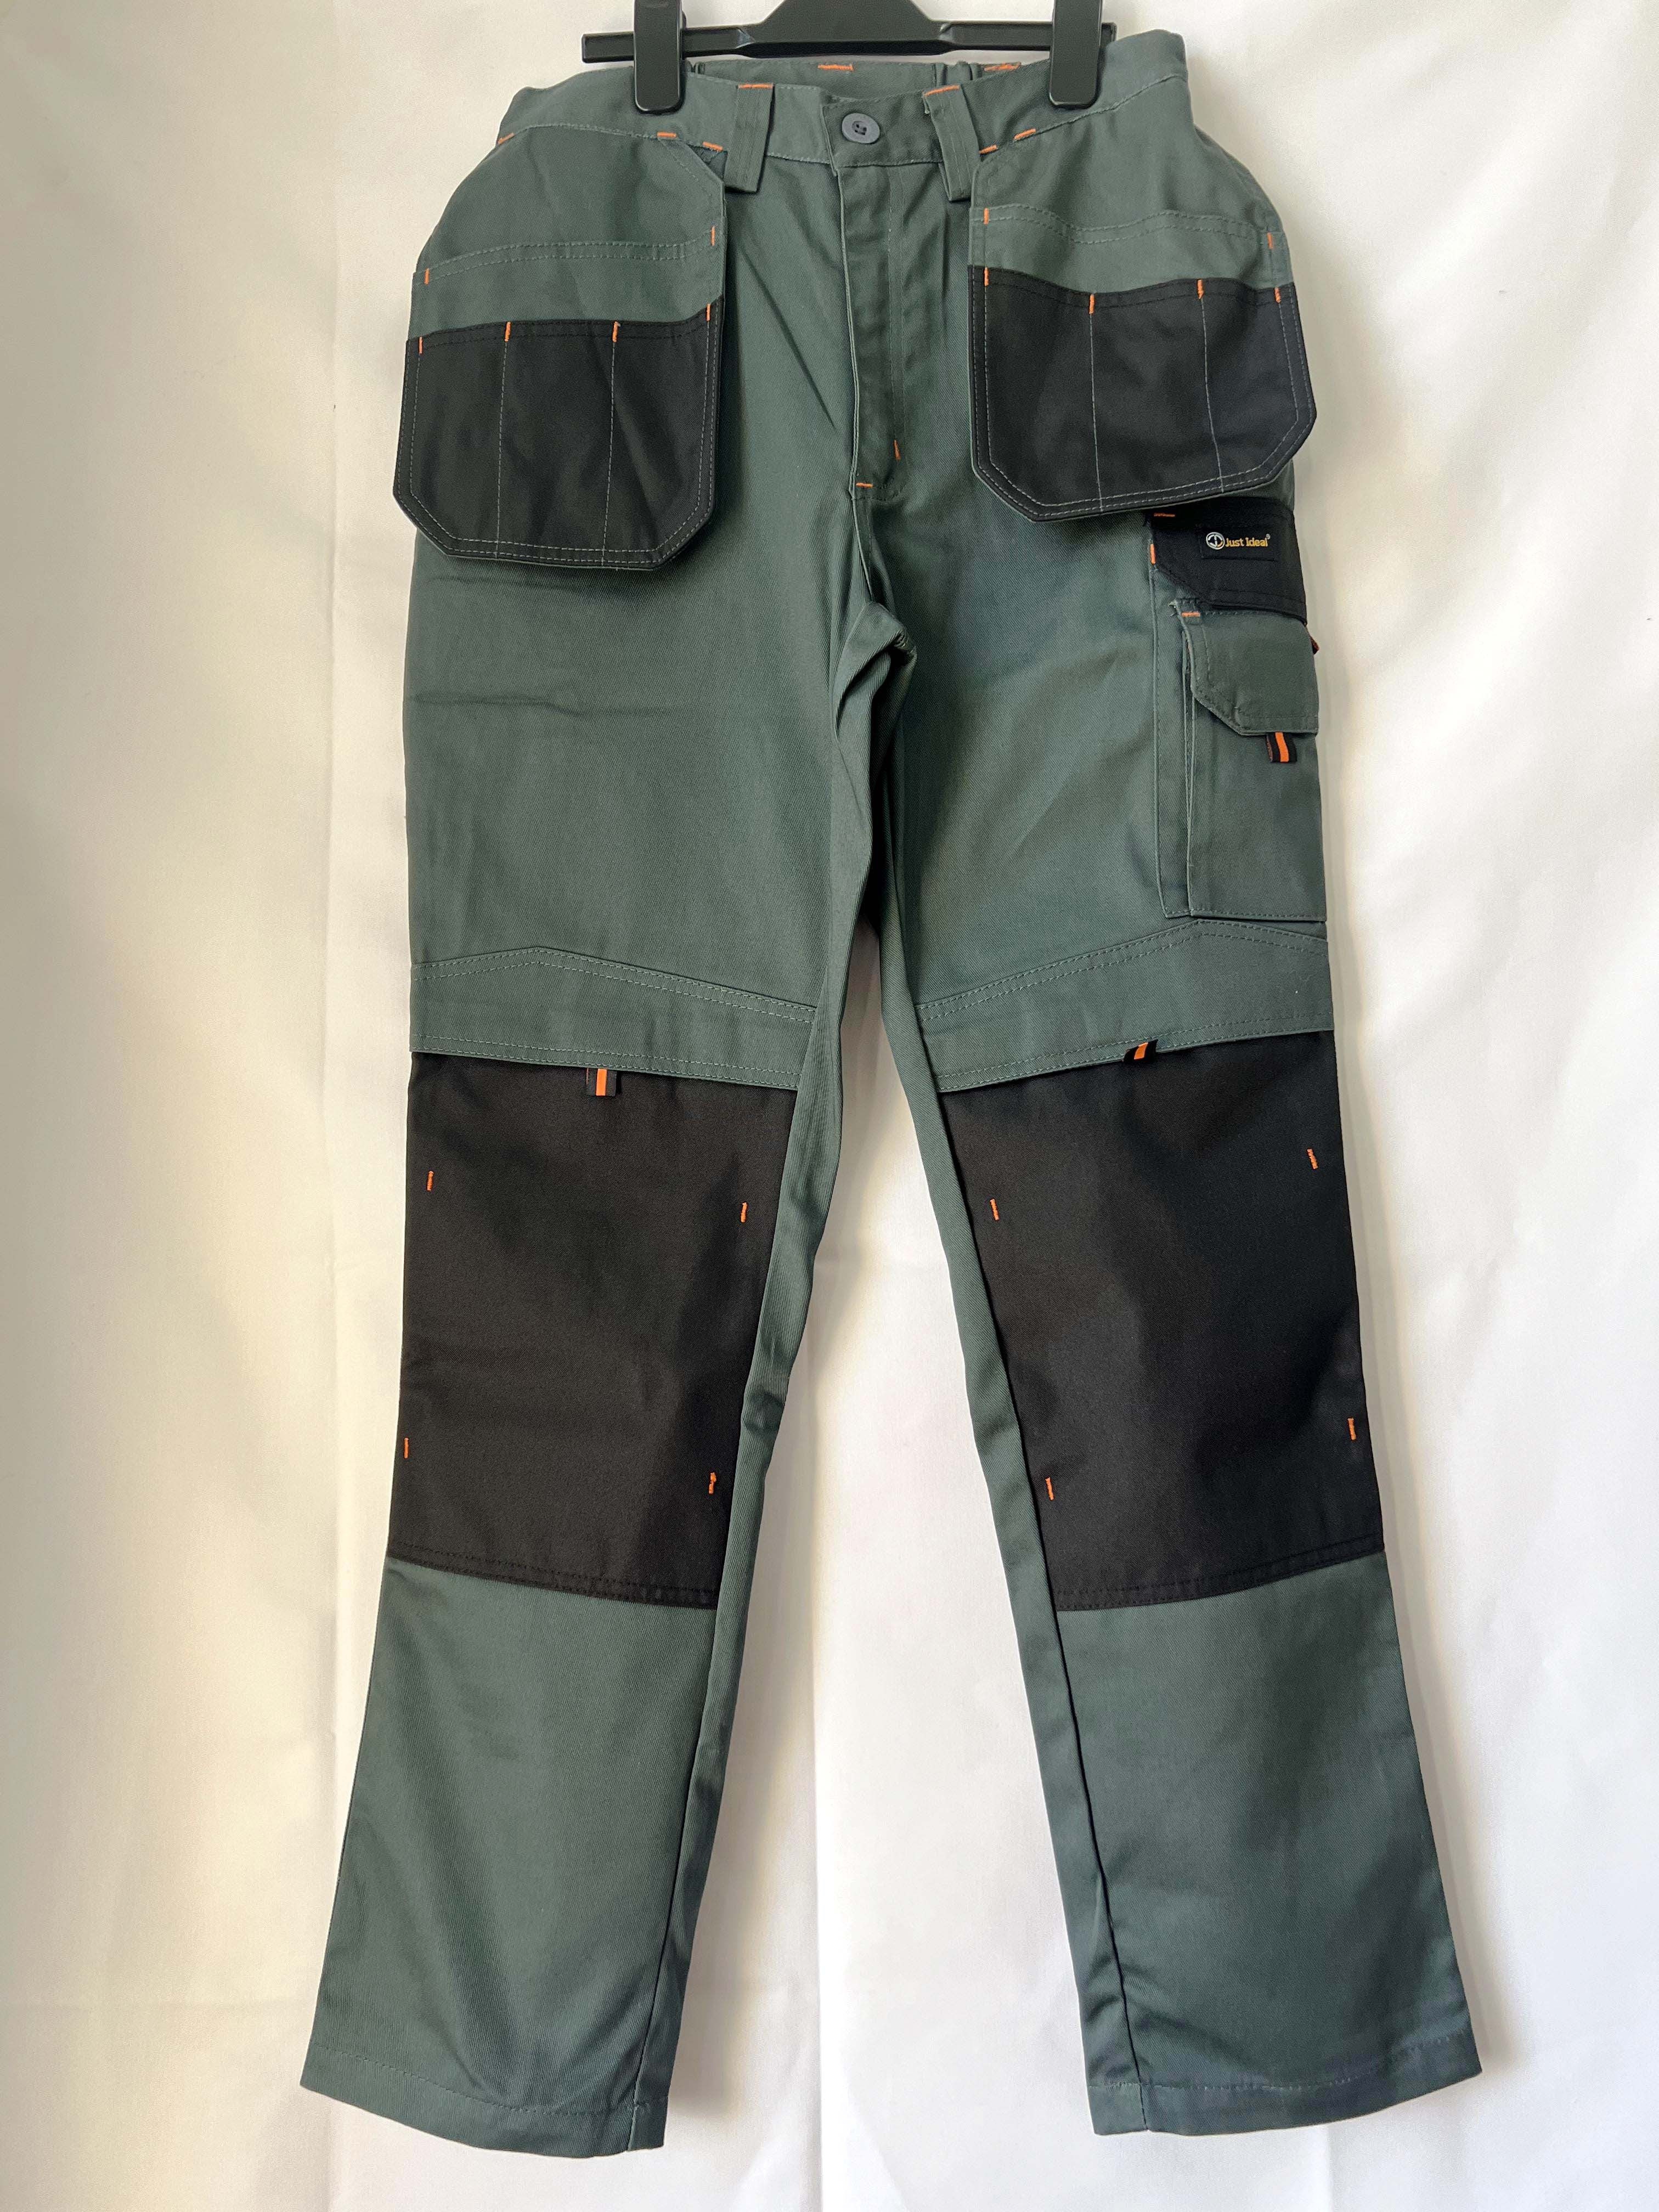 Pantalones militares con múltiples bolsillos para hombre, pantalones de  trabajo de combate, informales, senderismo, bolsillos, pantalones militares